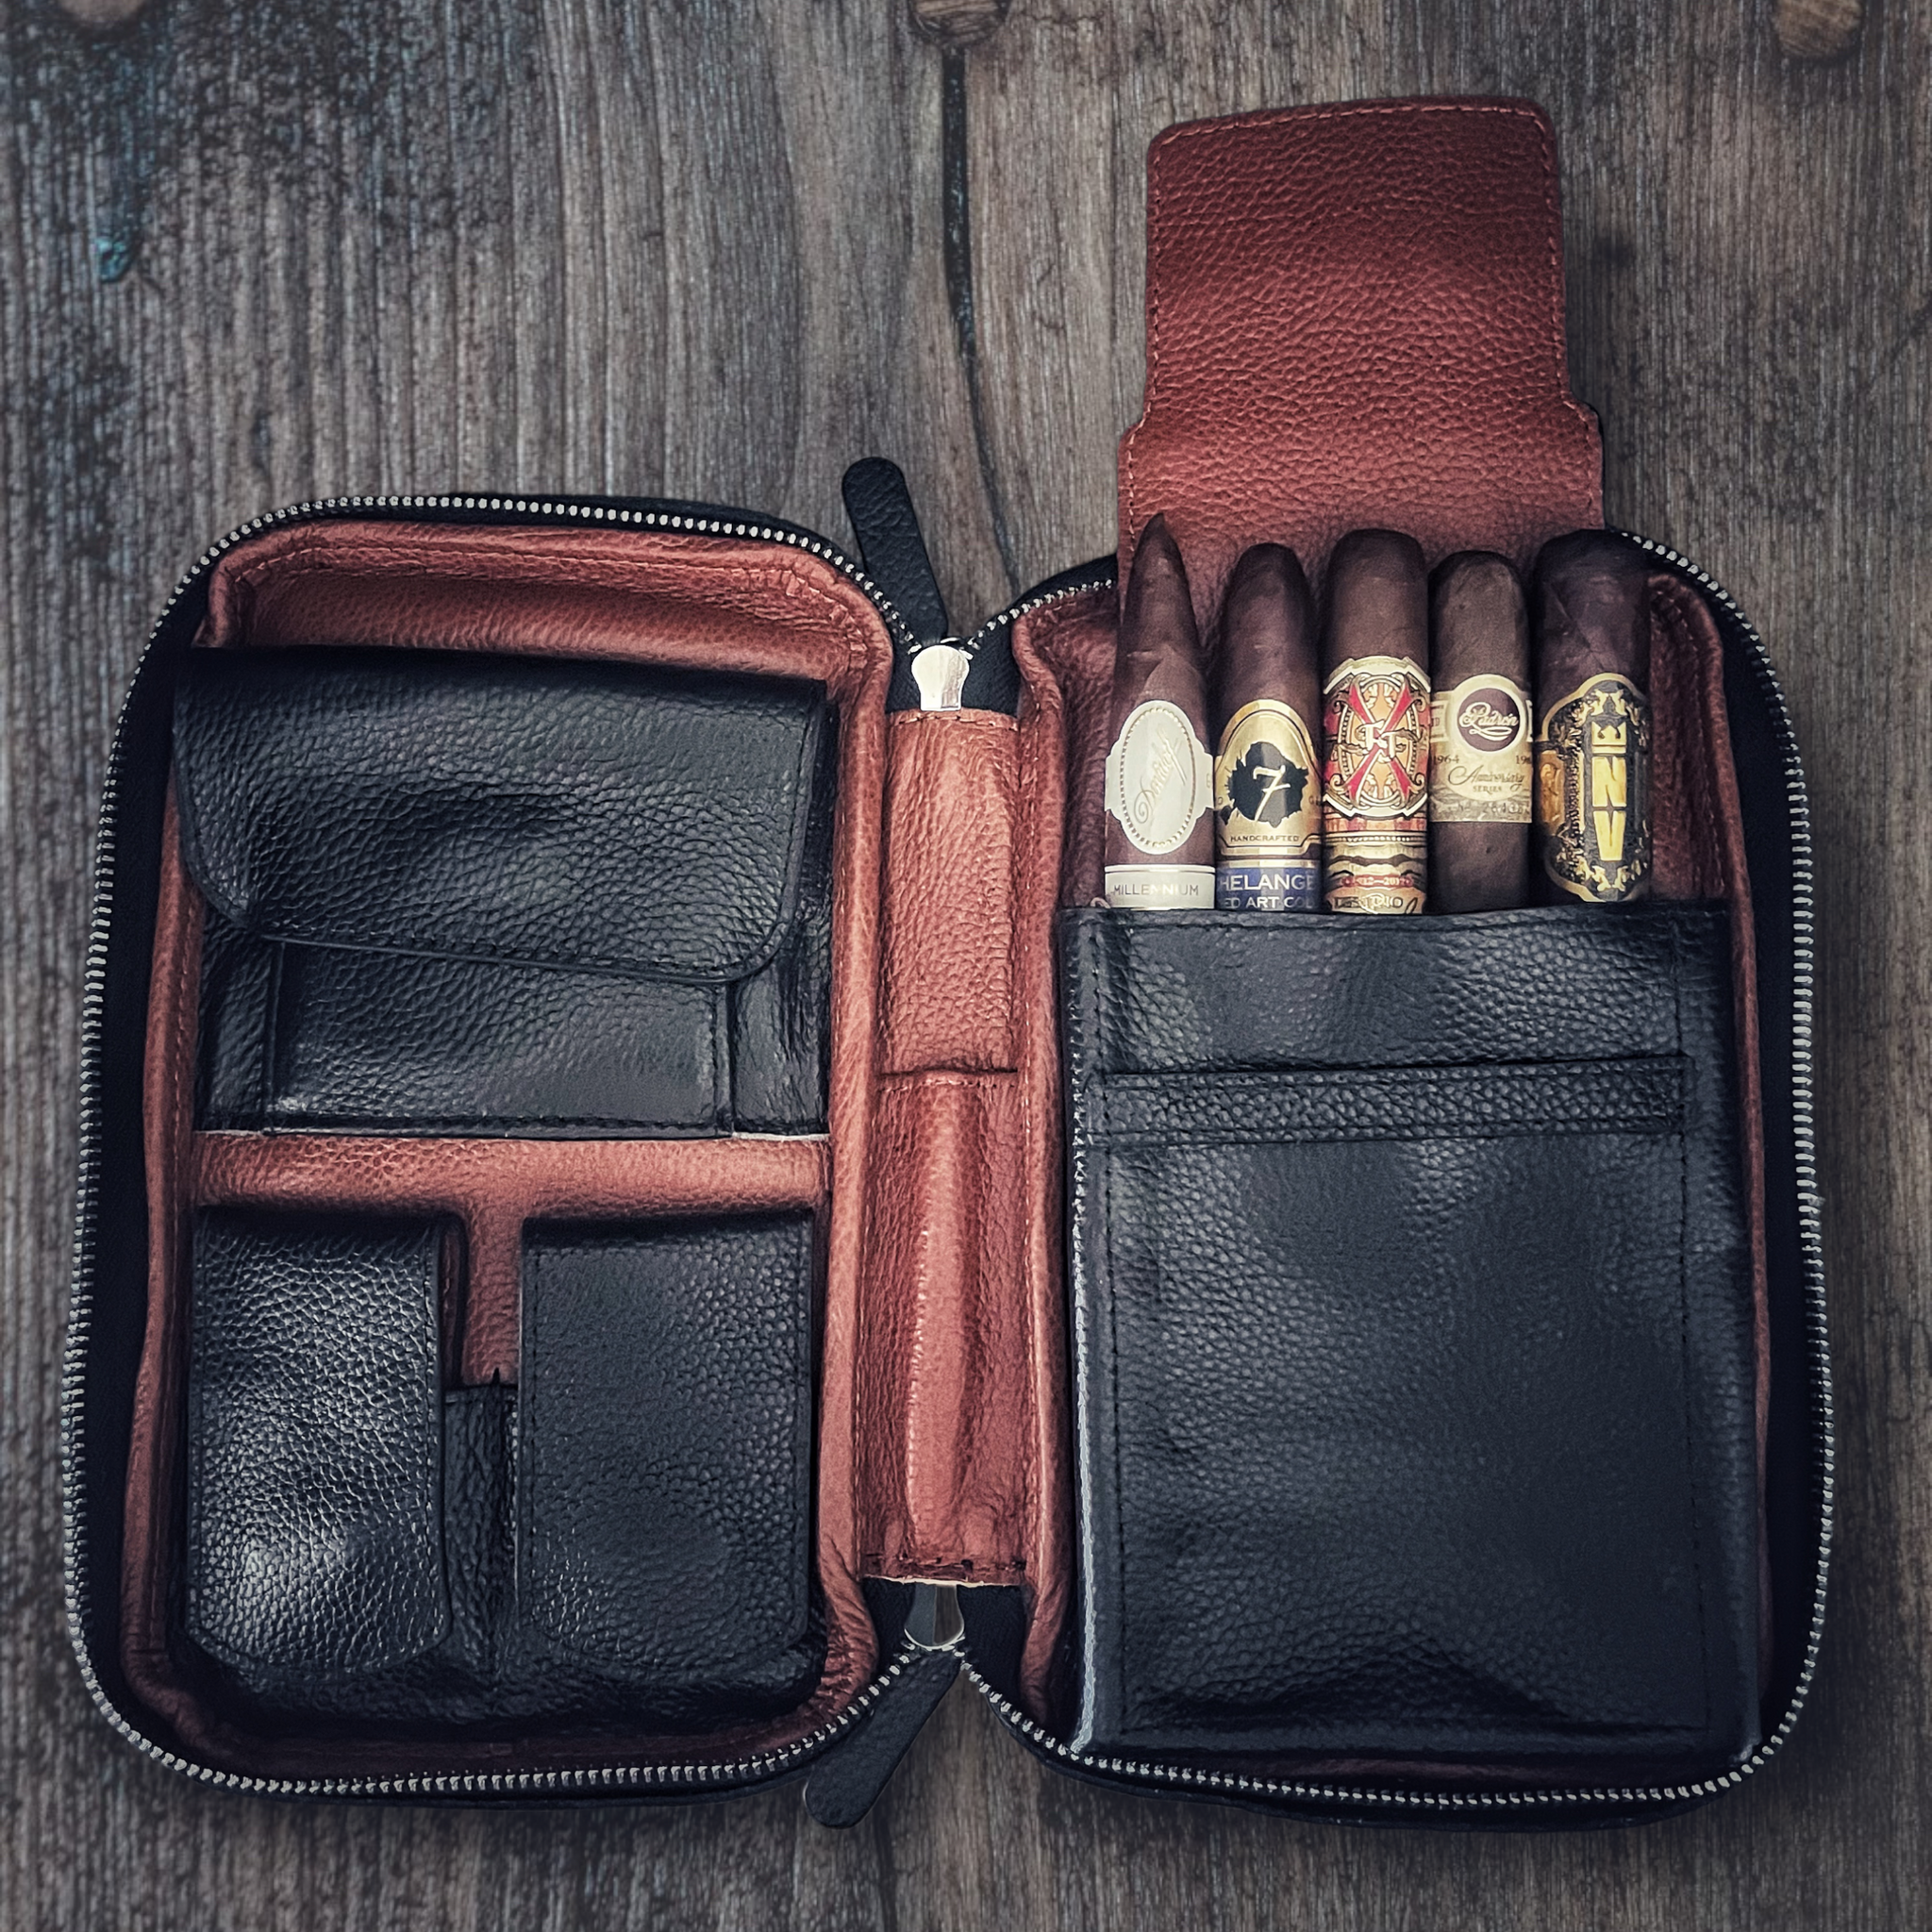 Luxury Brown Leather Cigar Case With Cutter - Vintage Gentlemen